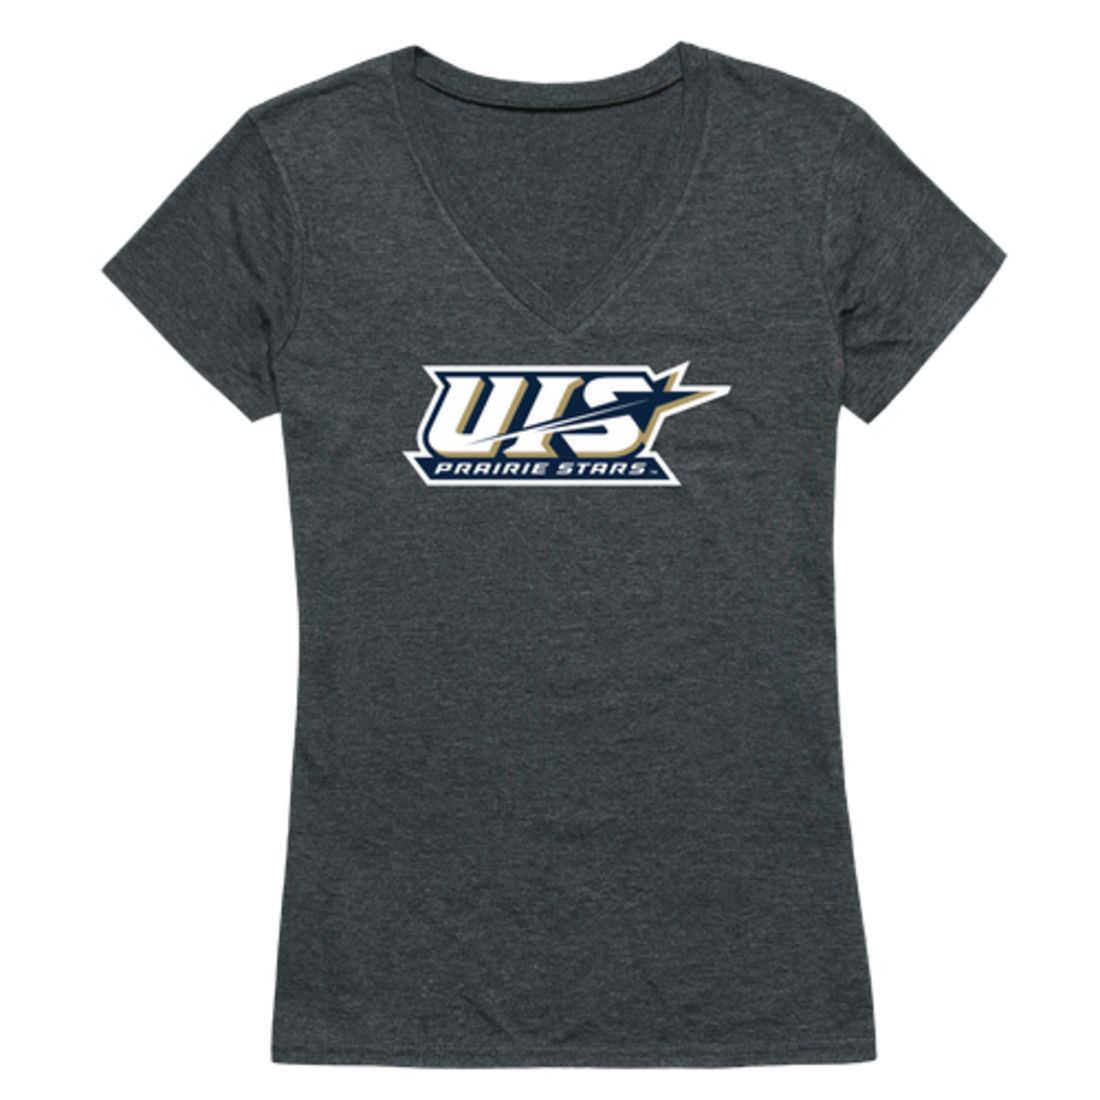 University of Illinois Springfield Prairie Stars Womens Cinder T-Shirt Tee